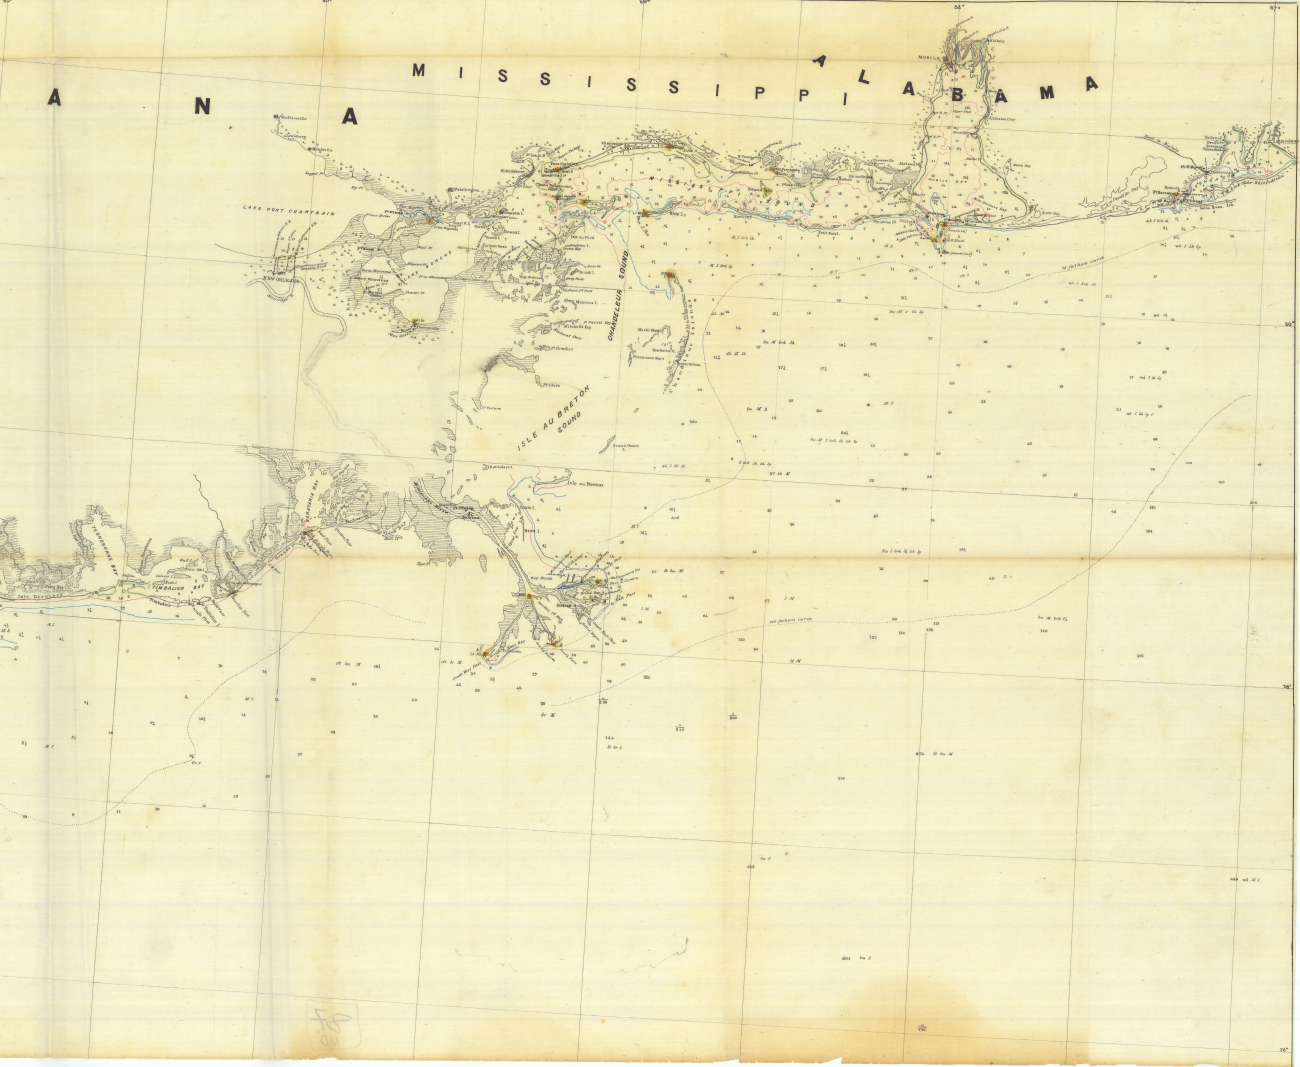 Reconnaissance map of the Coast of Louisiana, Alabama, and Florida from IsleDerniere to Pensacola